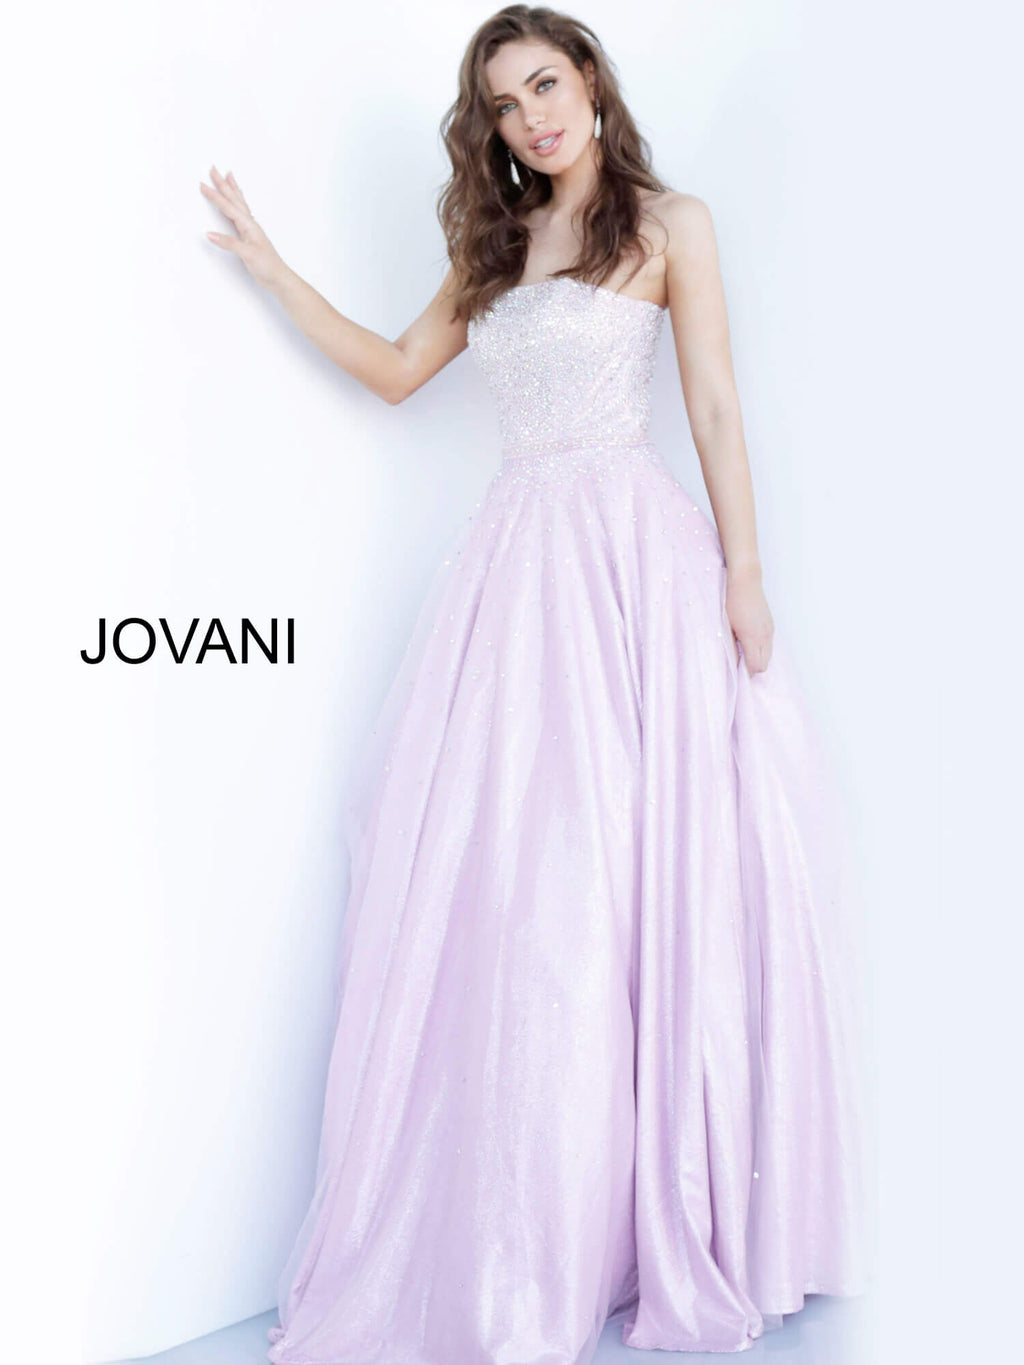 JOVANI 00462 Strapless Beaded Evening Dress